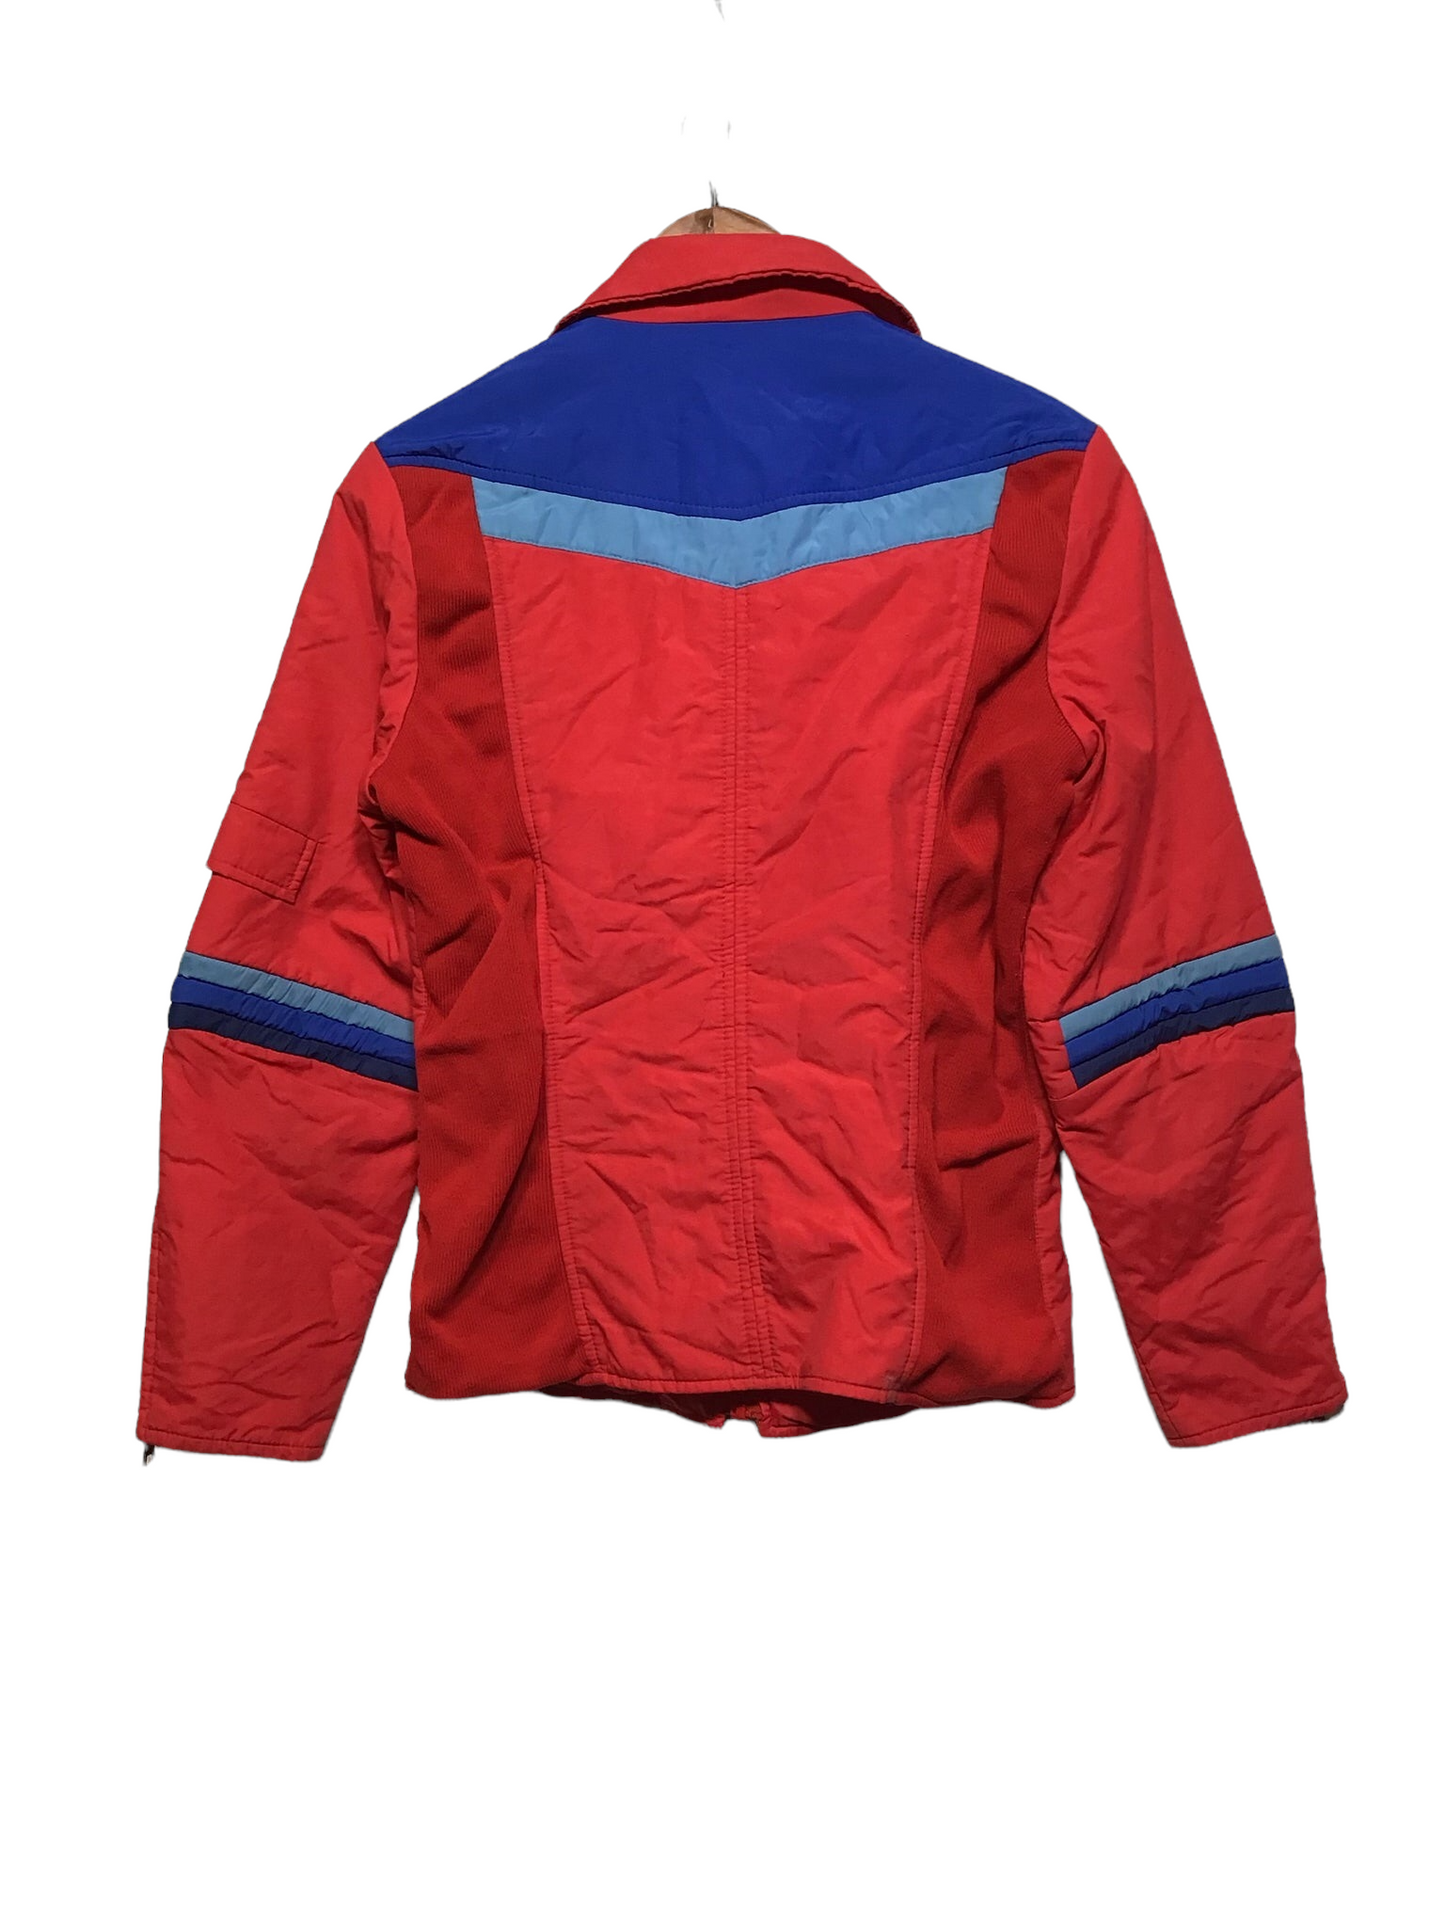 Red & Blue Ski Jacket (Size S)